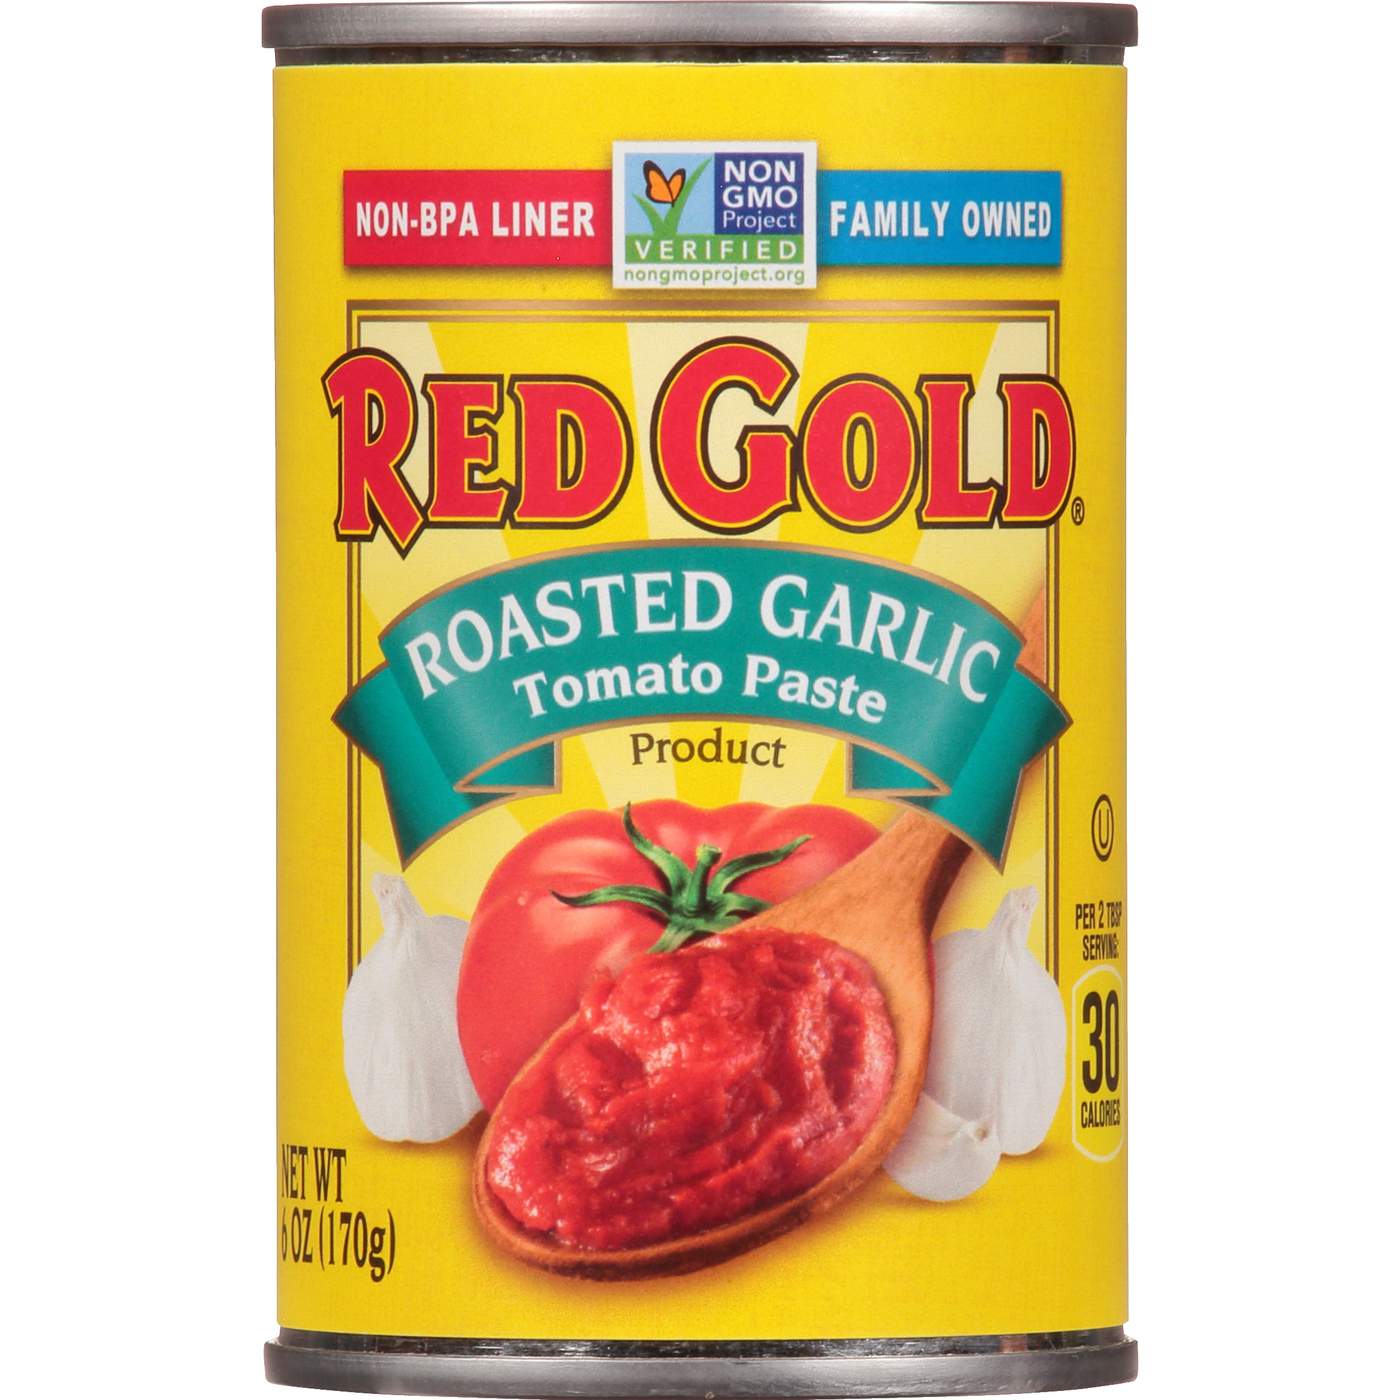 Red Gold Roasted Garlic Tomato Paste; image 1 of 3